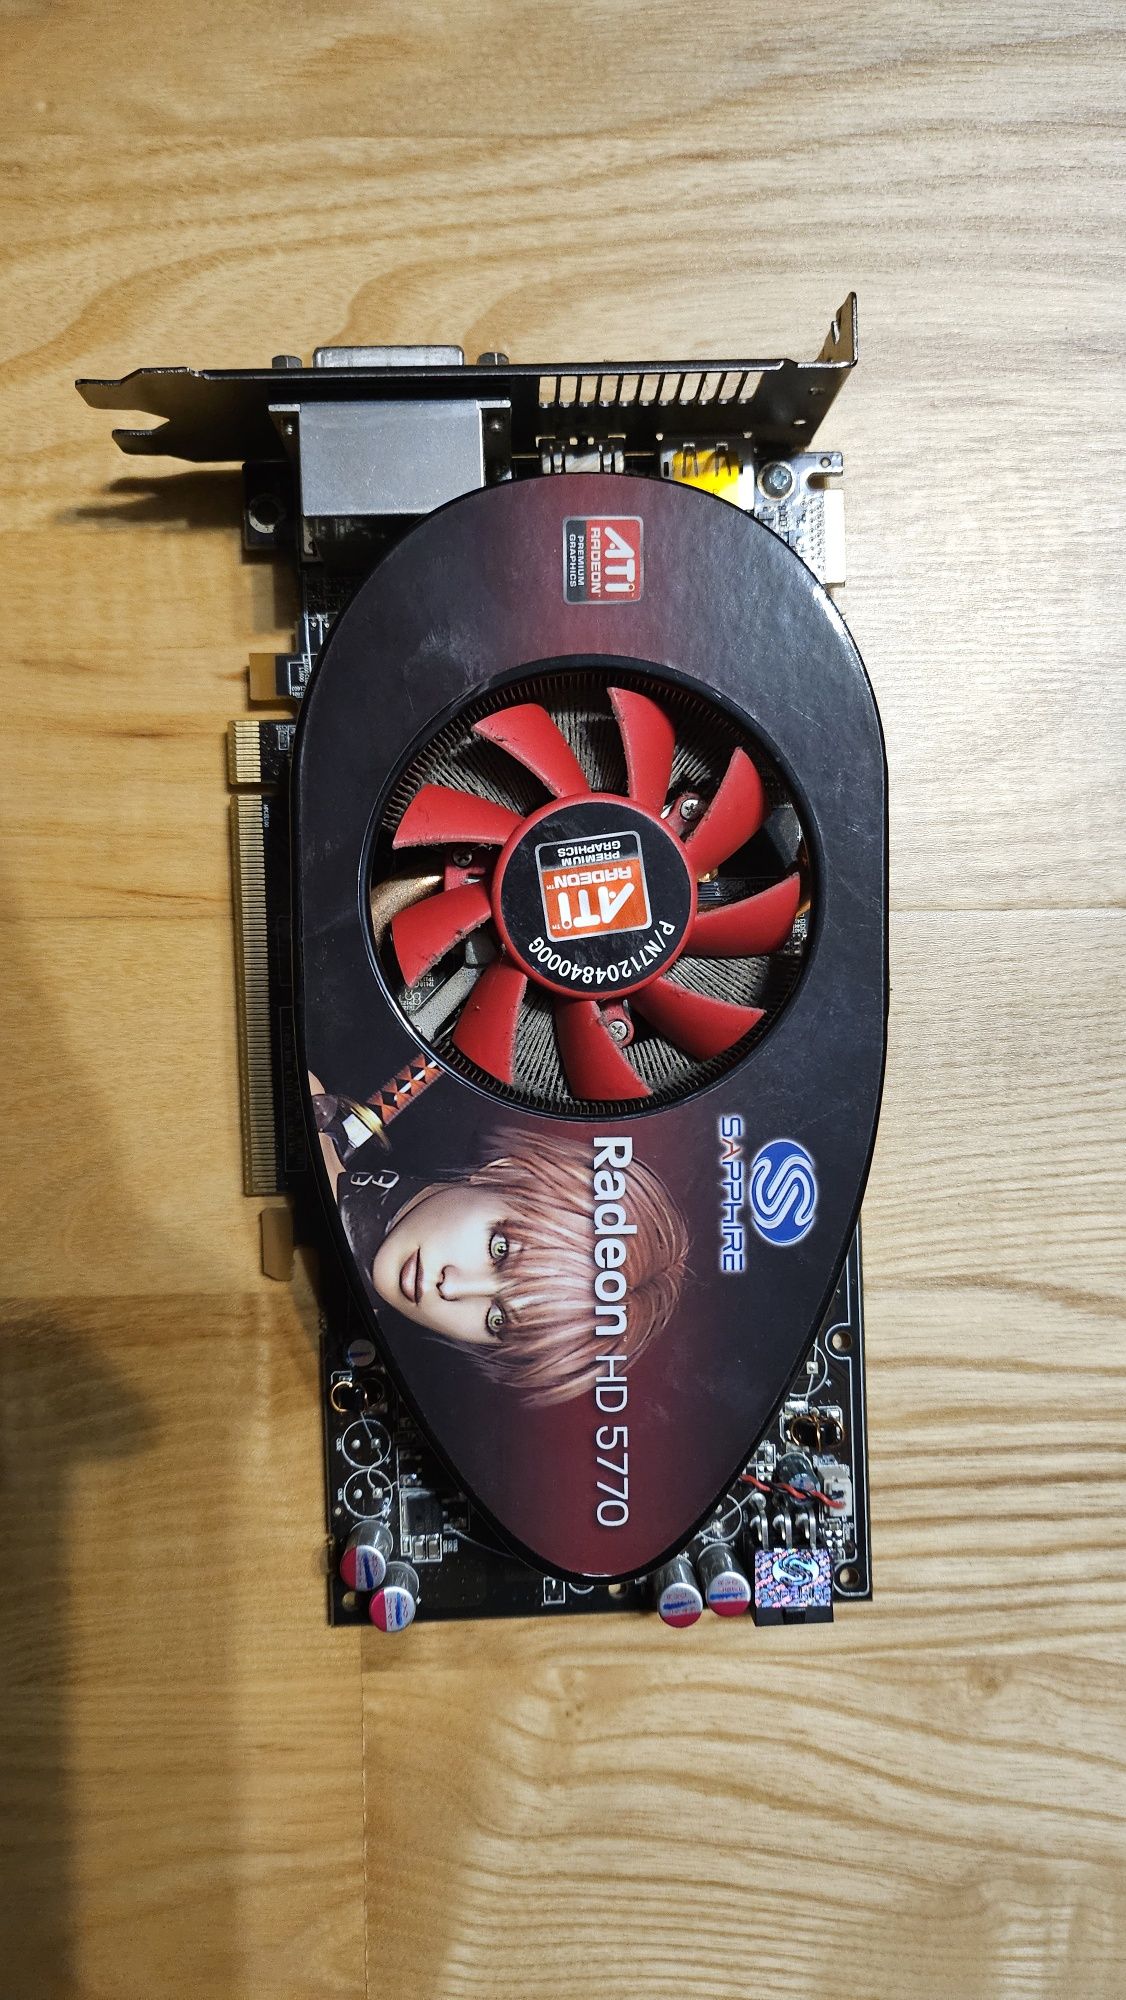 Komputer AMD x4 620, Radeon HD5770, GoodRam DDR3 8gb, crosair TX650